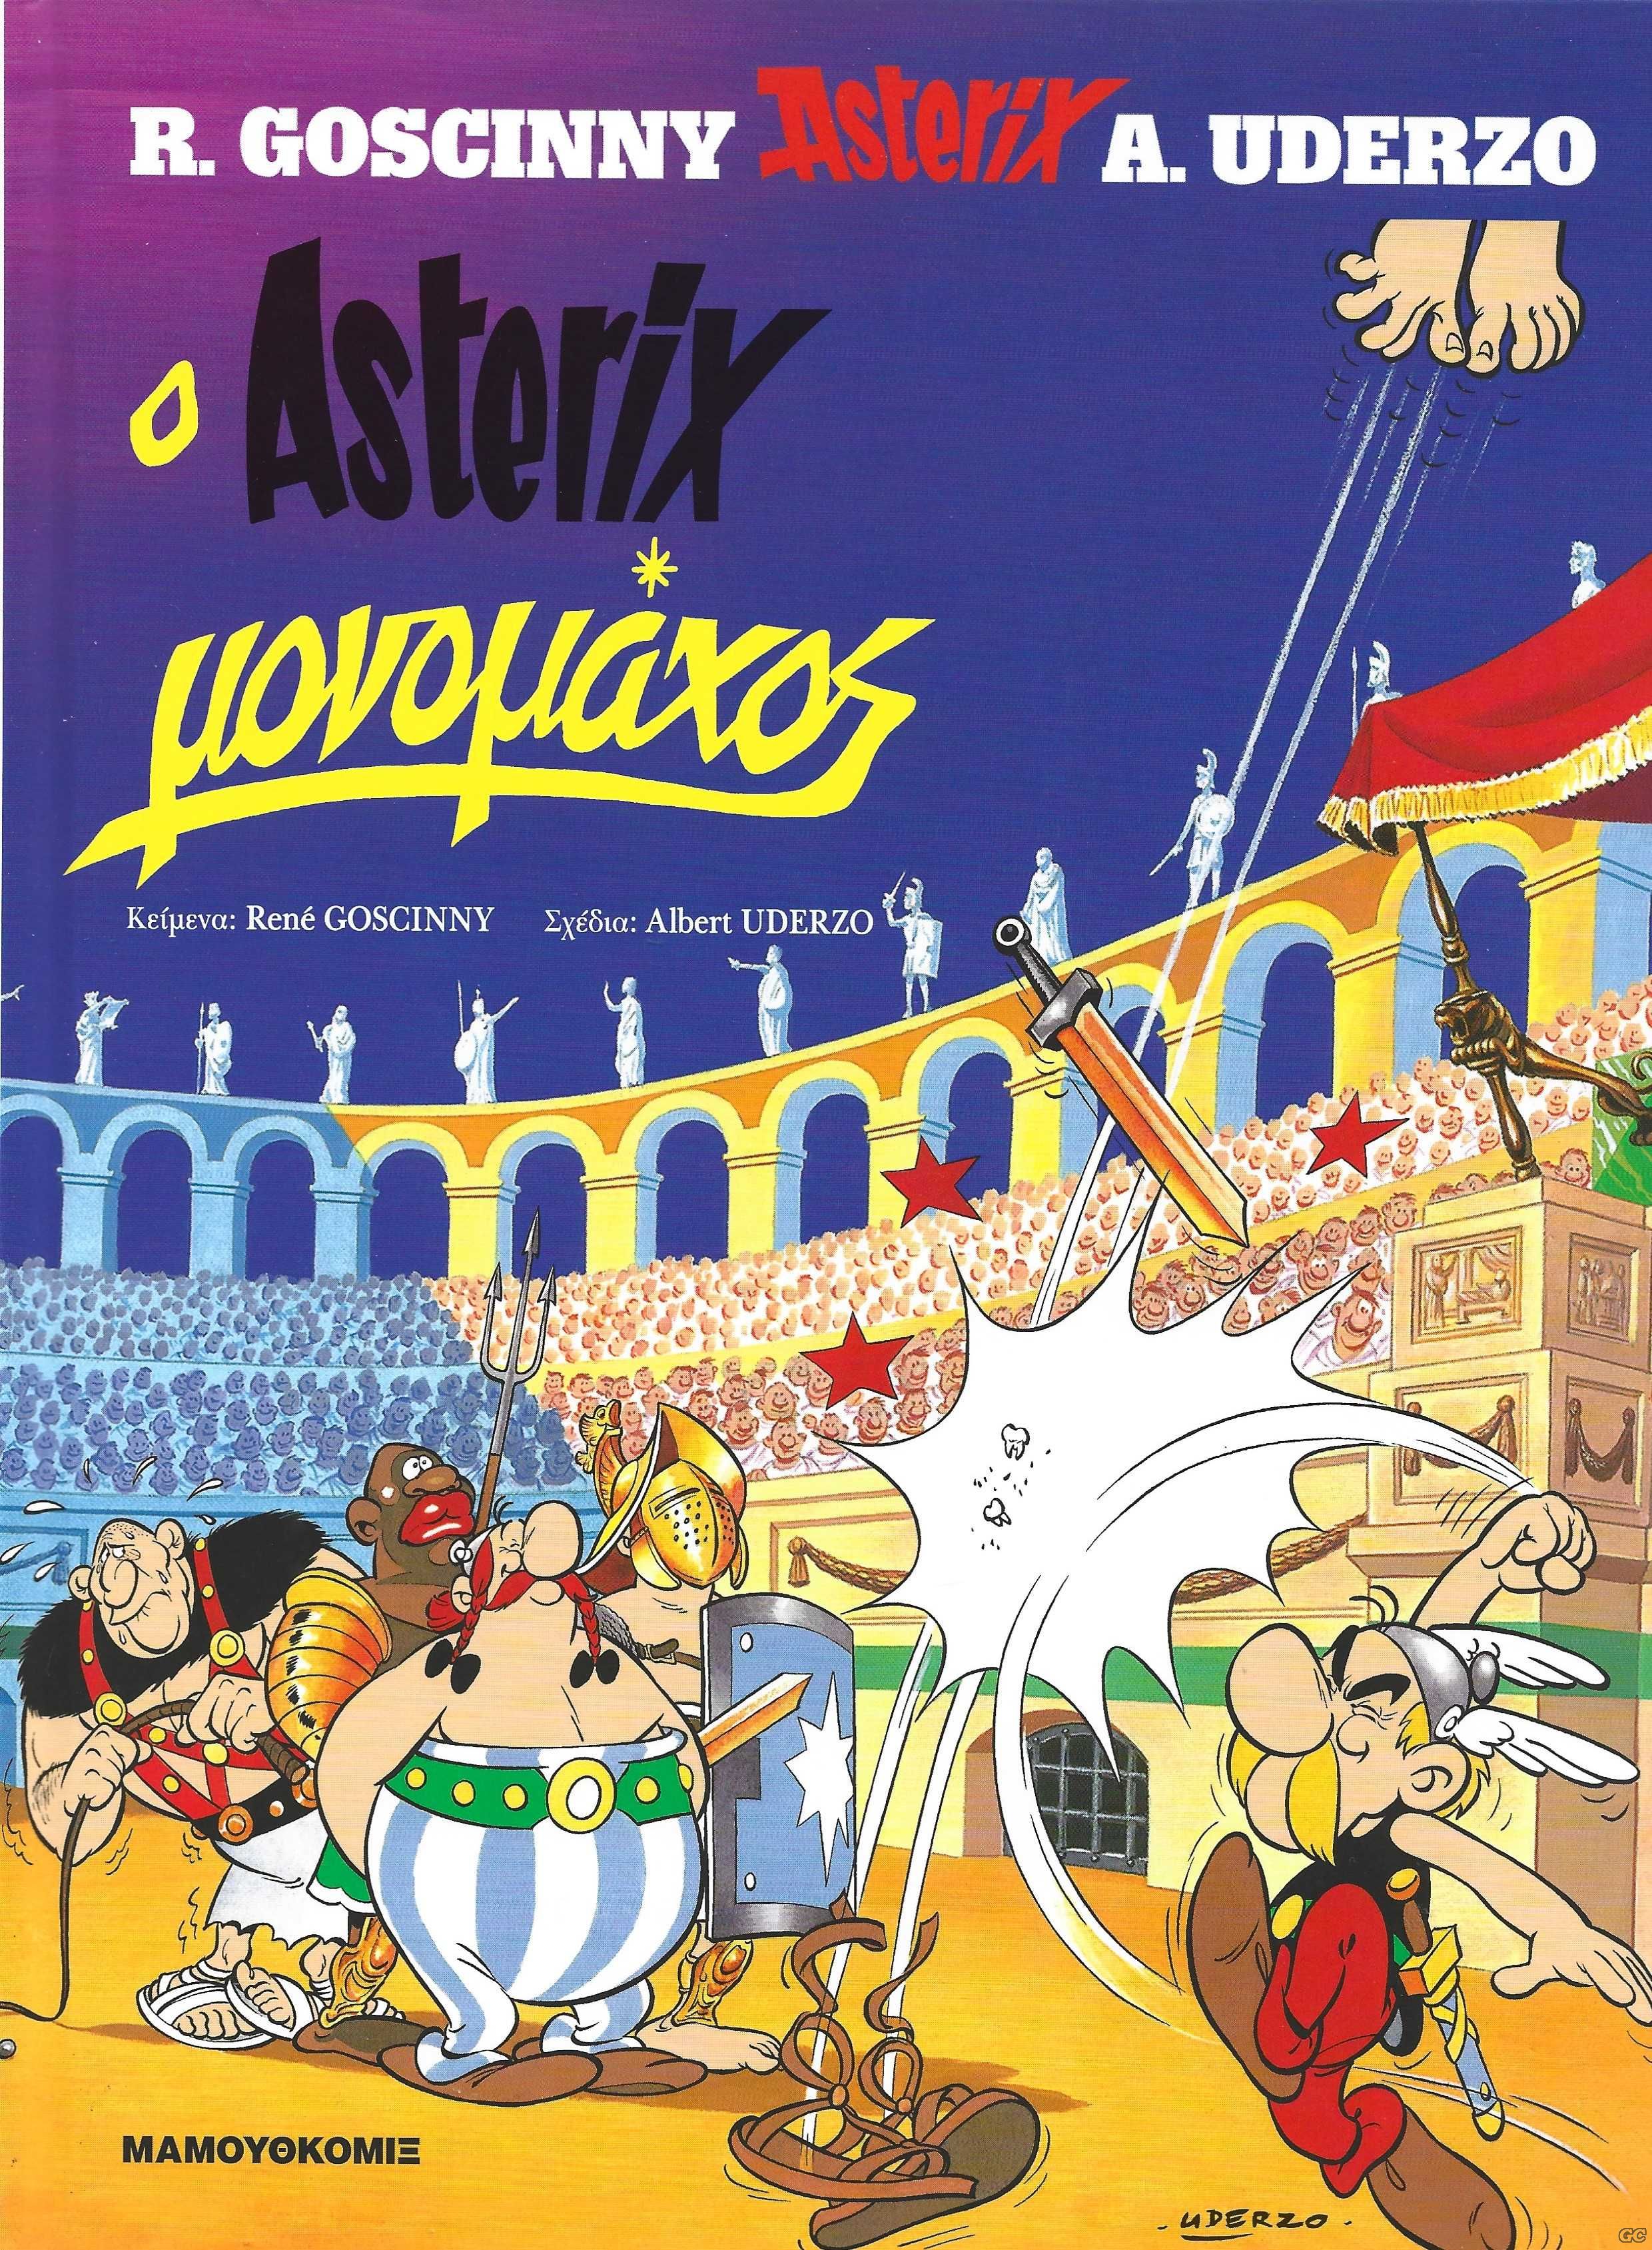 Asterix2010_0004.jpg